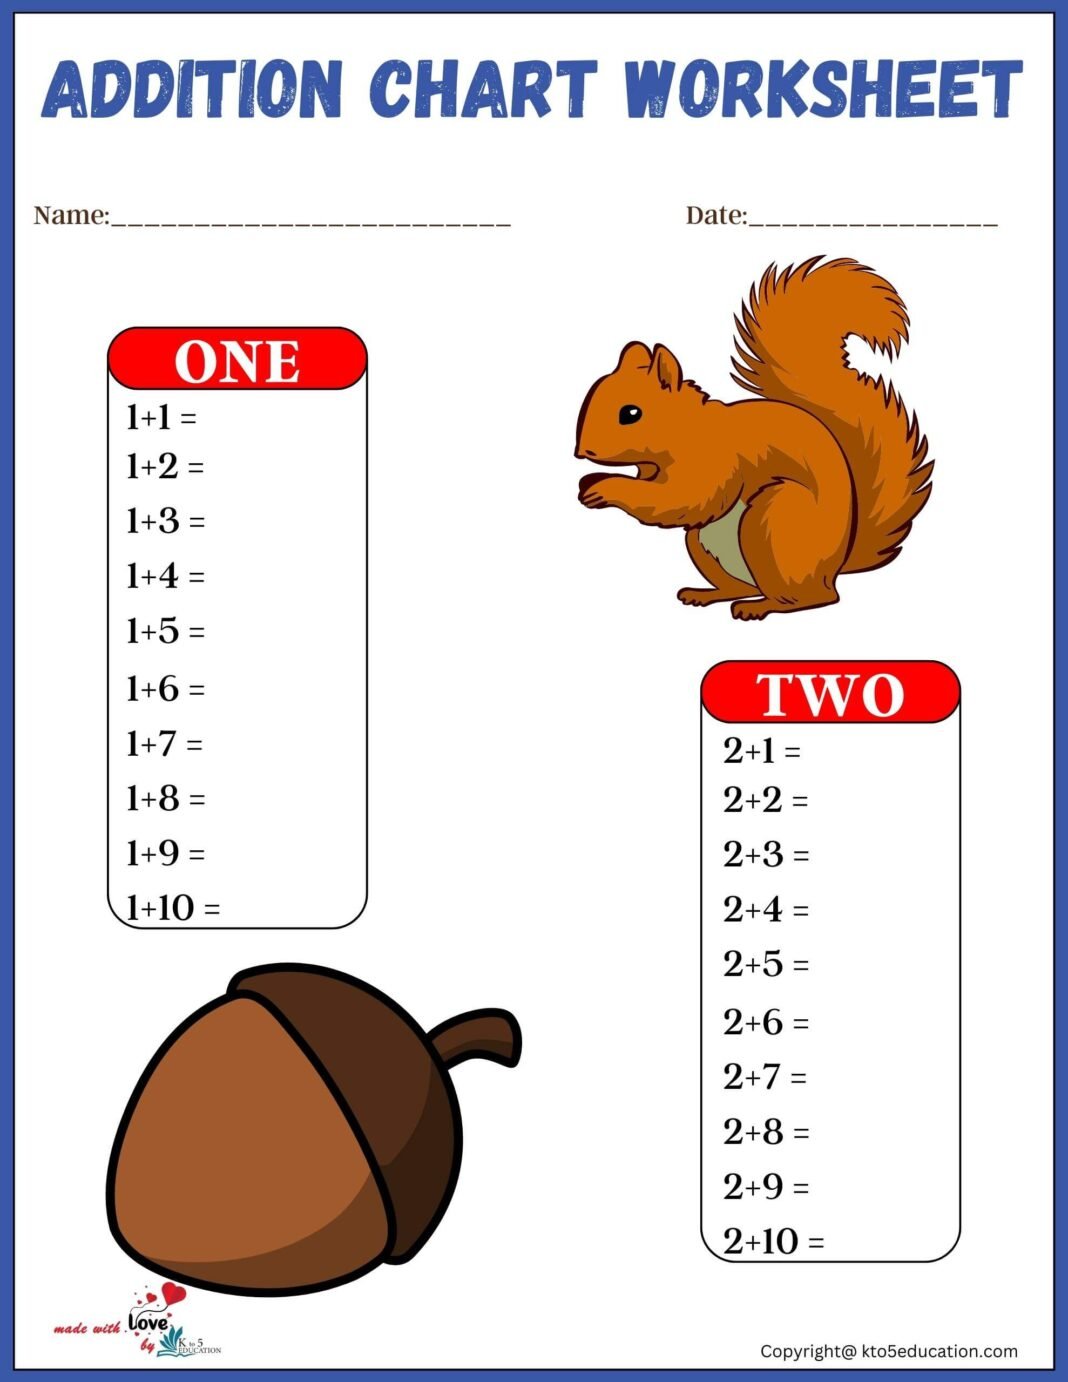 kindergarten-addition-chart-worksheet-free-download